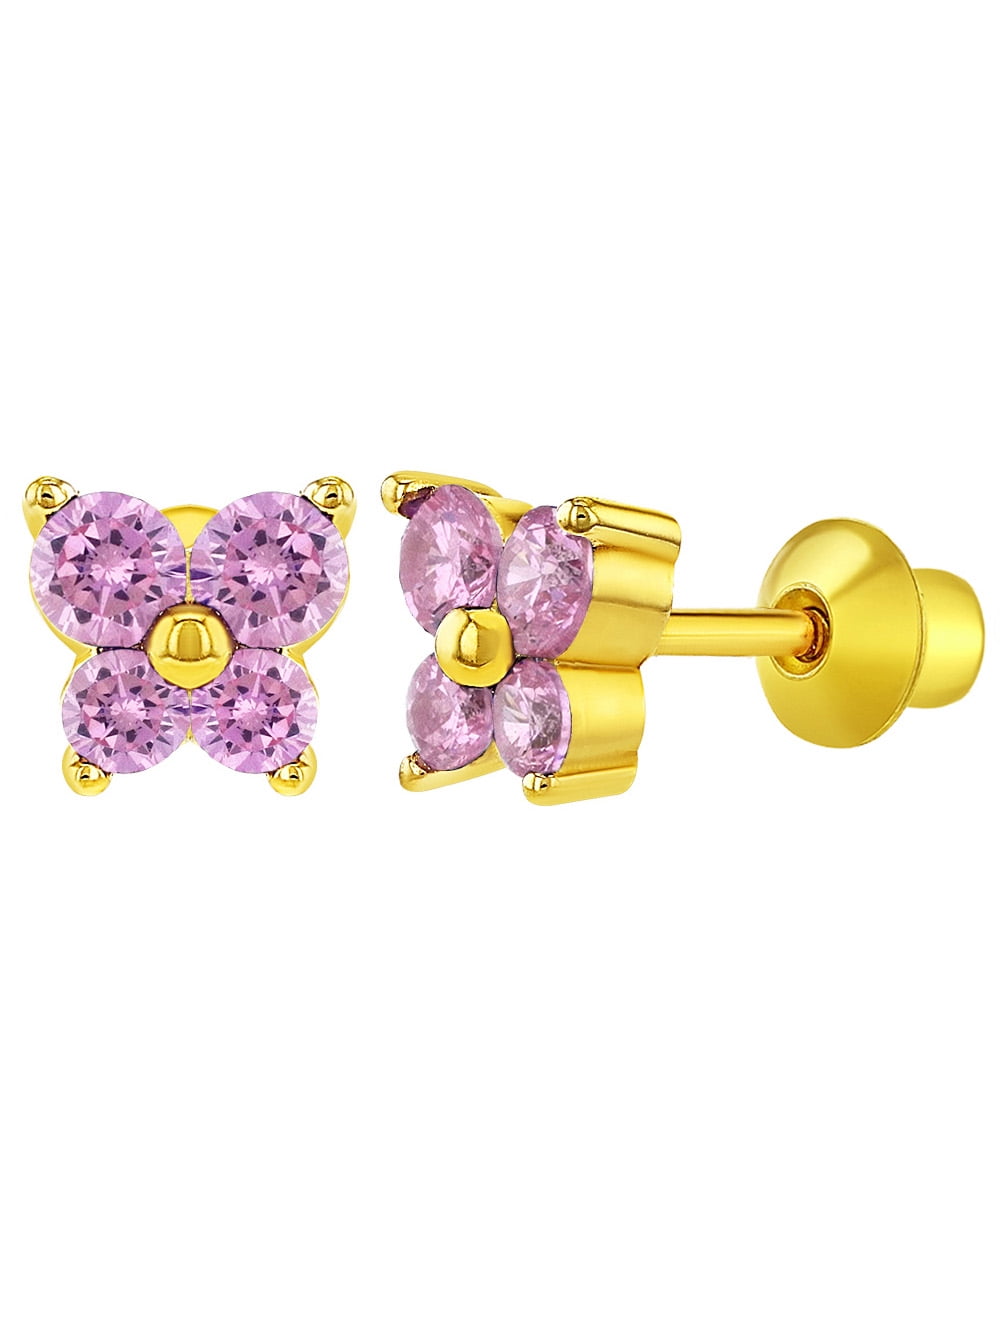 Child Baby Girls kids Security Crystal Heart Cute Hoop earrings 14K Gold Filled 